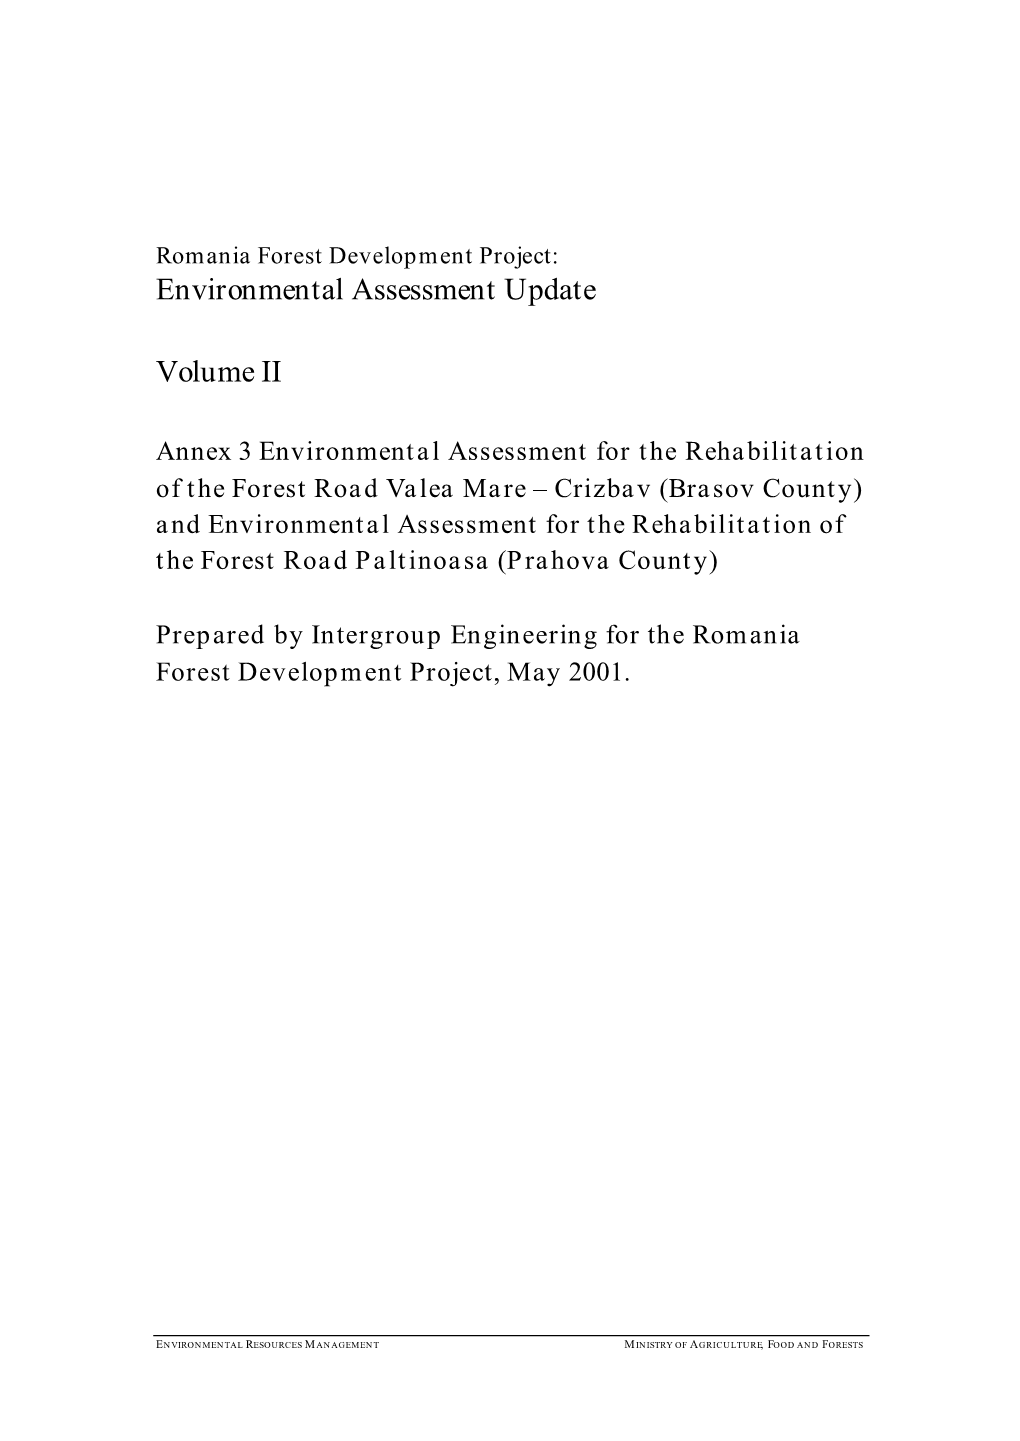 Environmental Assessment Update Volume II